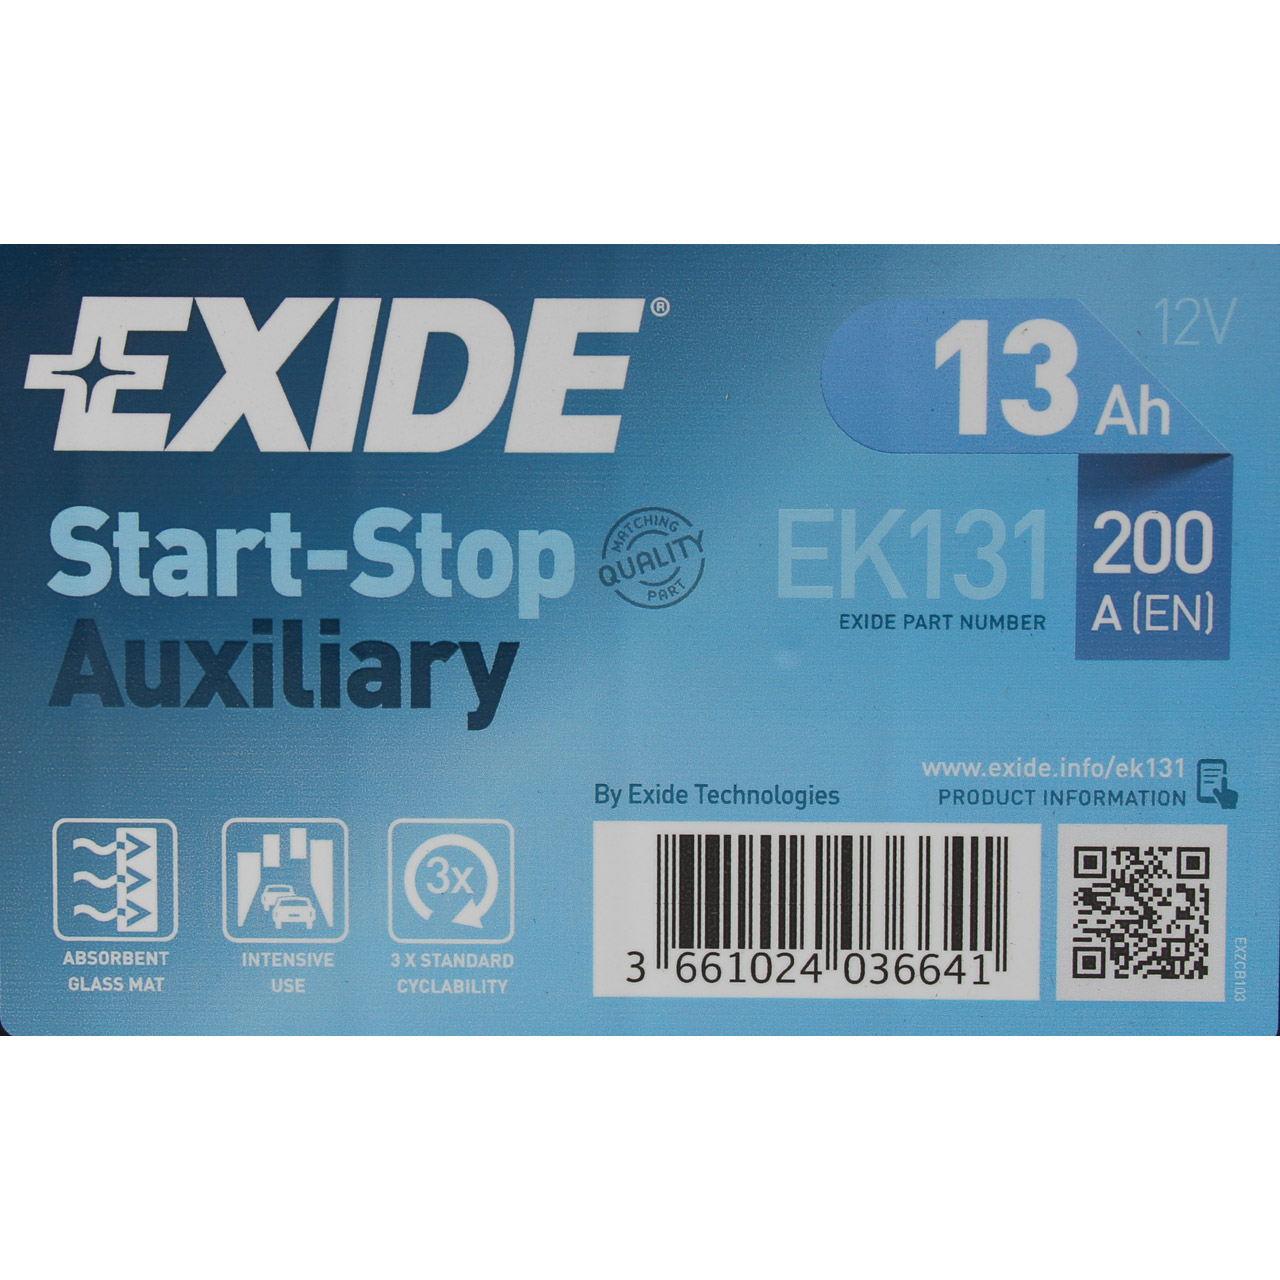 EXIDE EK131 Start-Stop Auxiliary AGM Stützbatterie 12V 13Ah für AUDI BMW MERCEDES PORSCHE